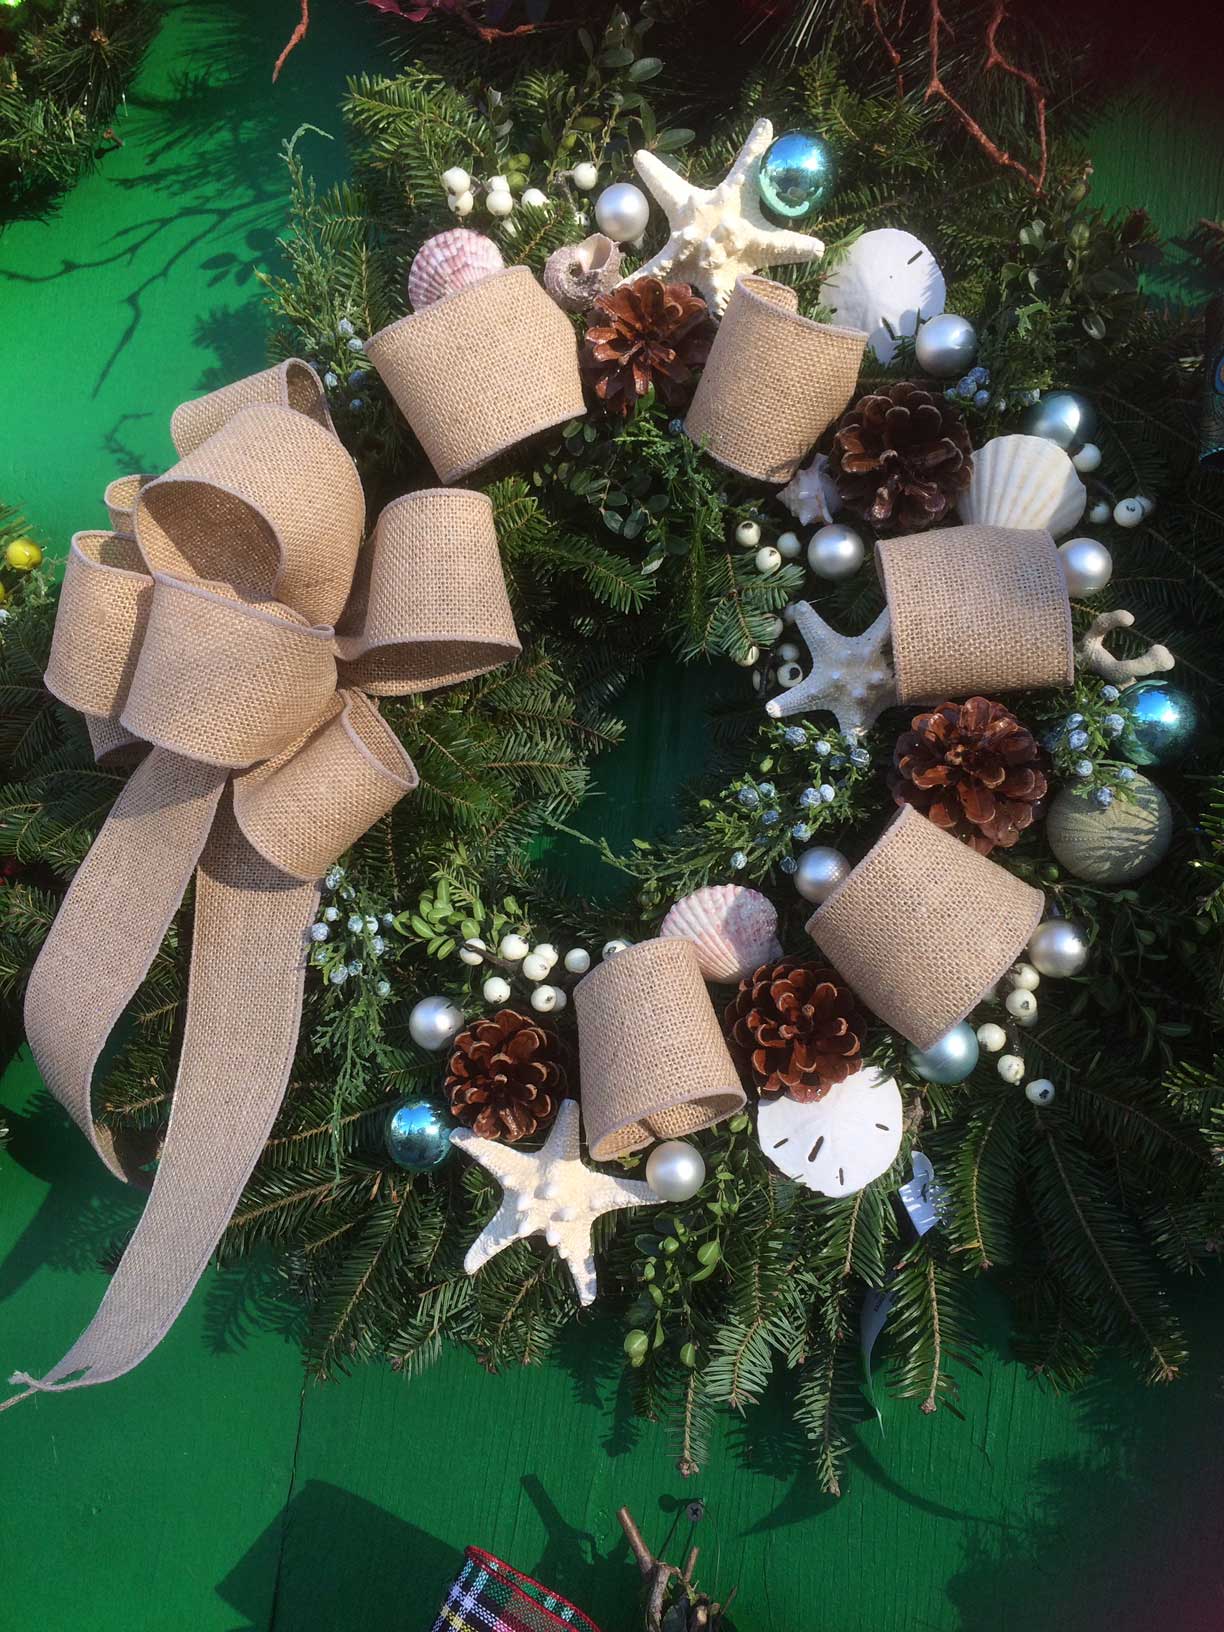 Christmas Wreaths at Goffle Brook Farms in Ridgewood